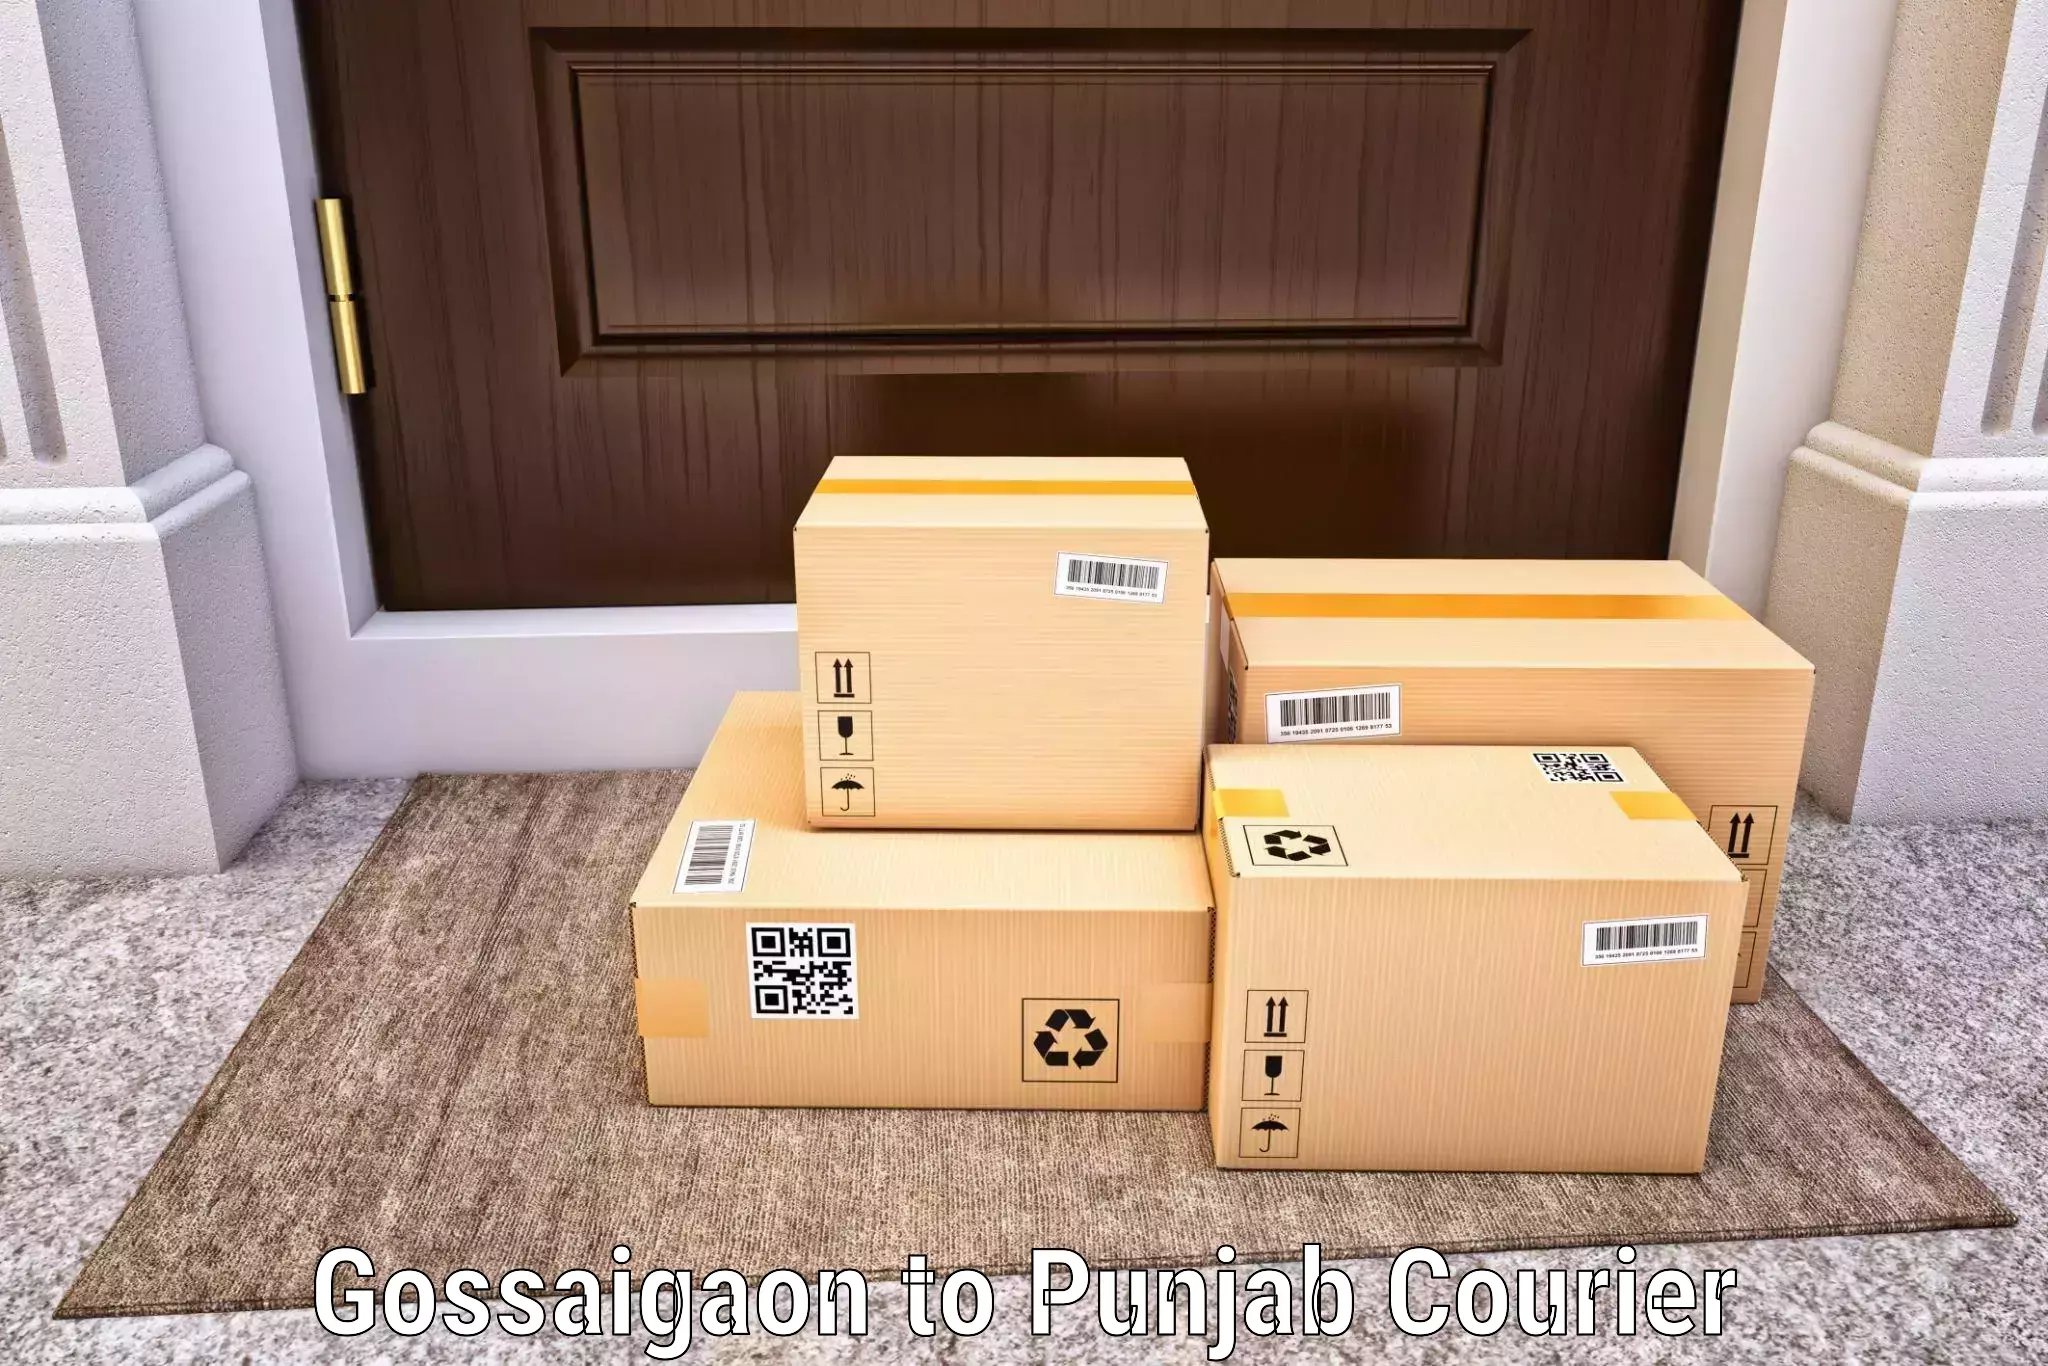 Package tracking Gossaigaon to Kotkapura